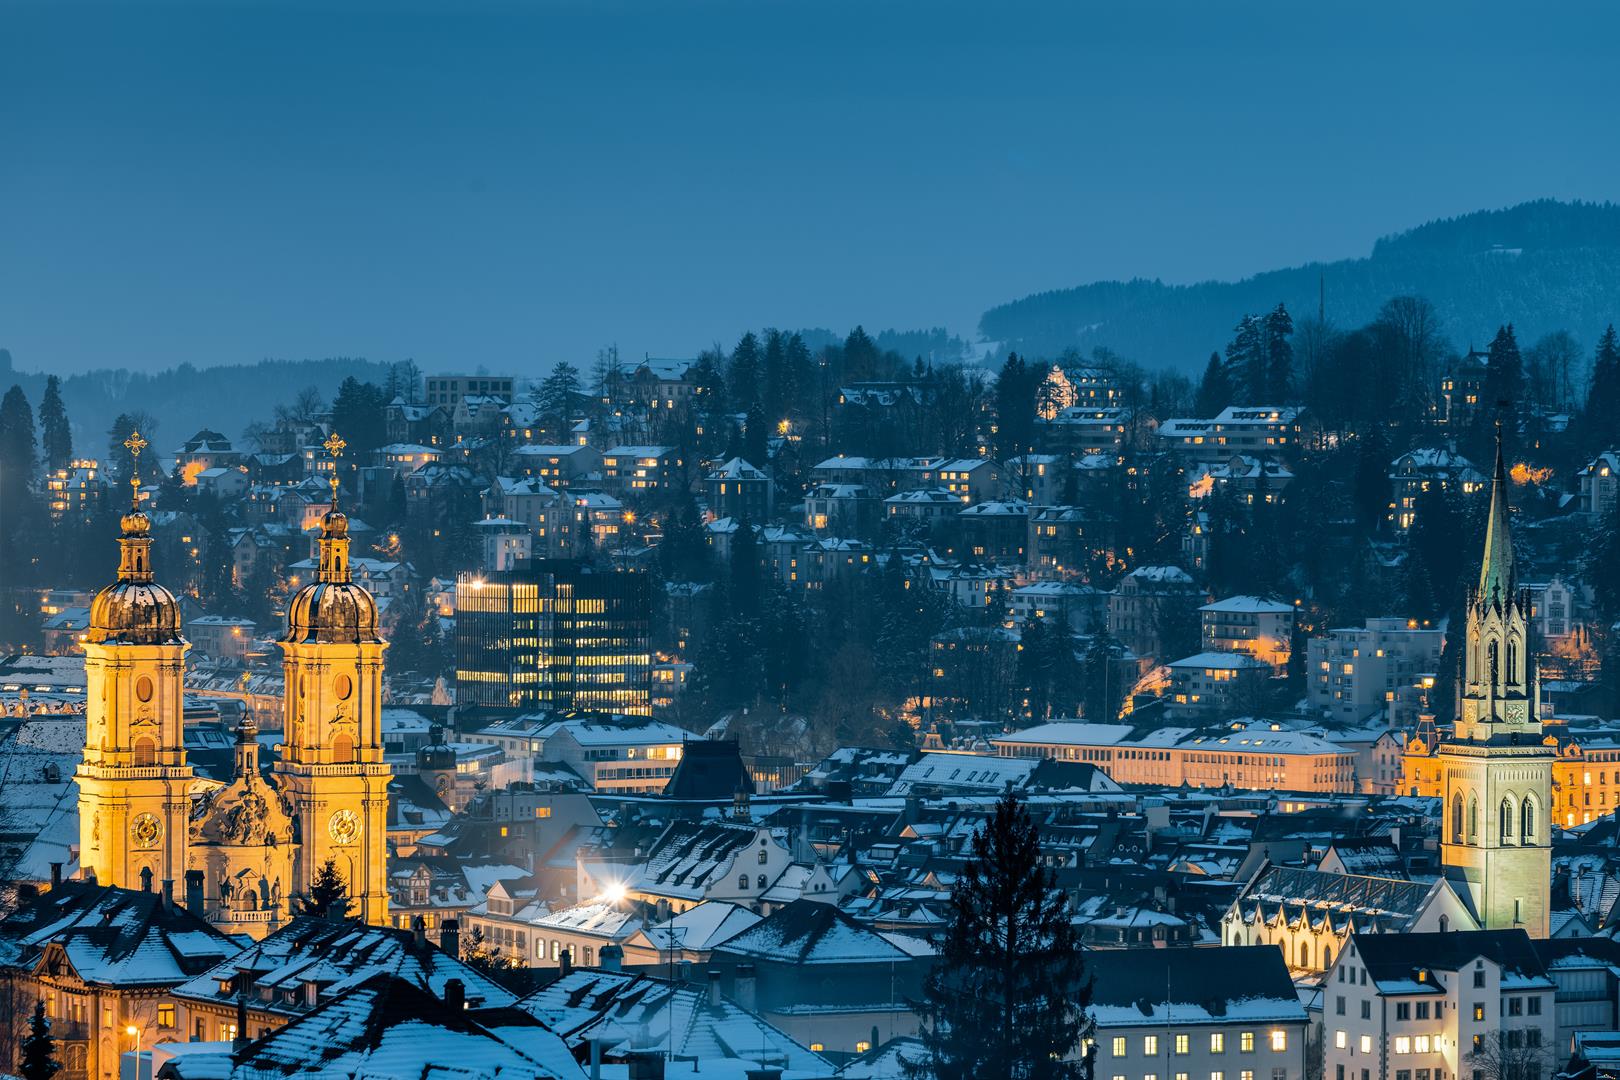 St. Gallen Inspires the Faithful